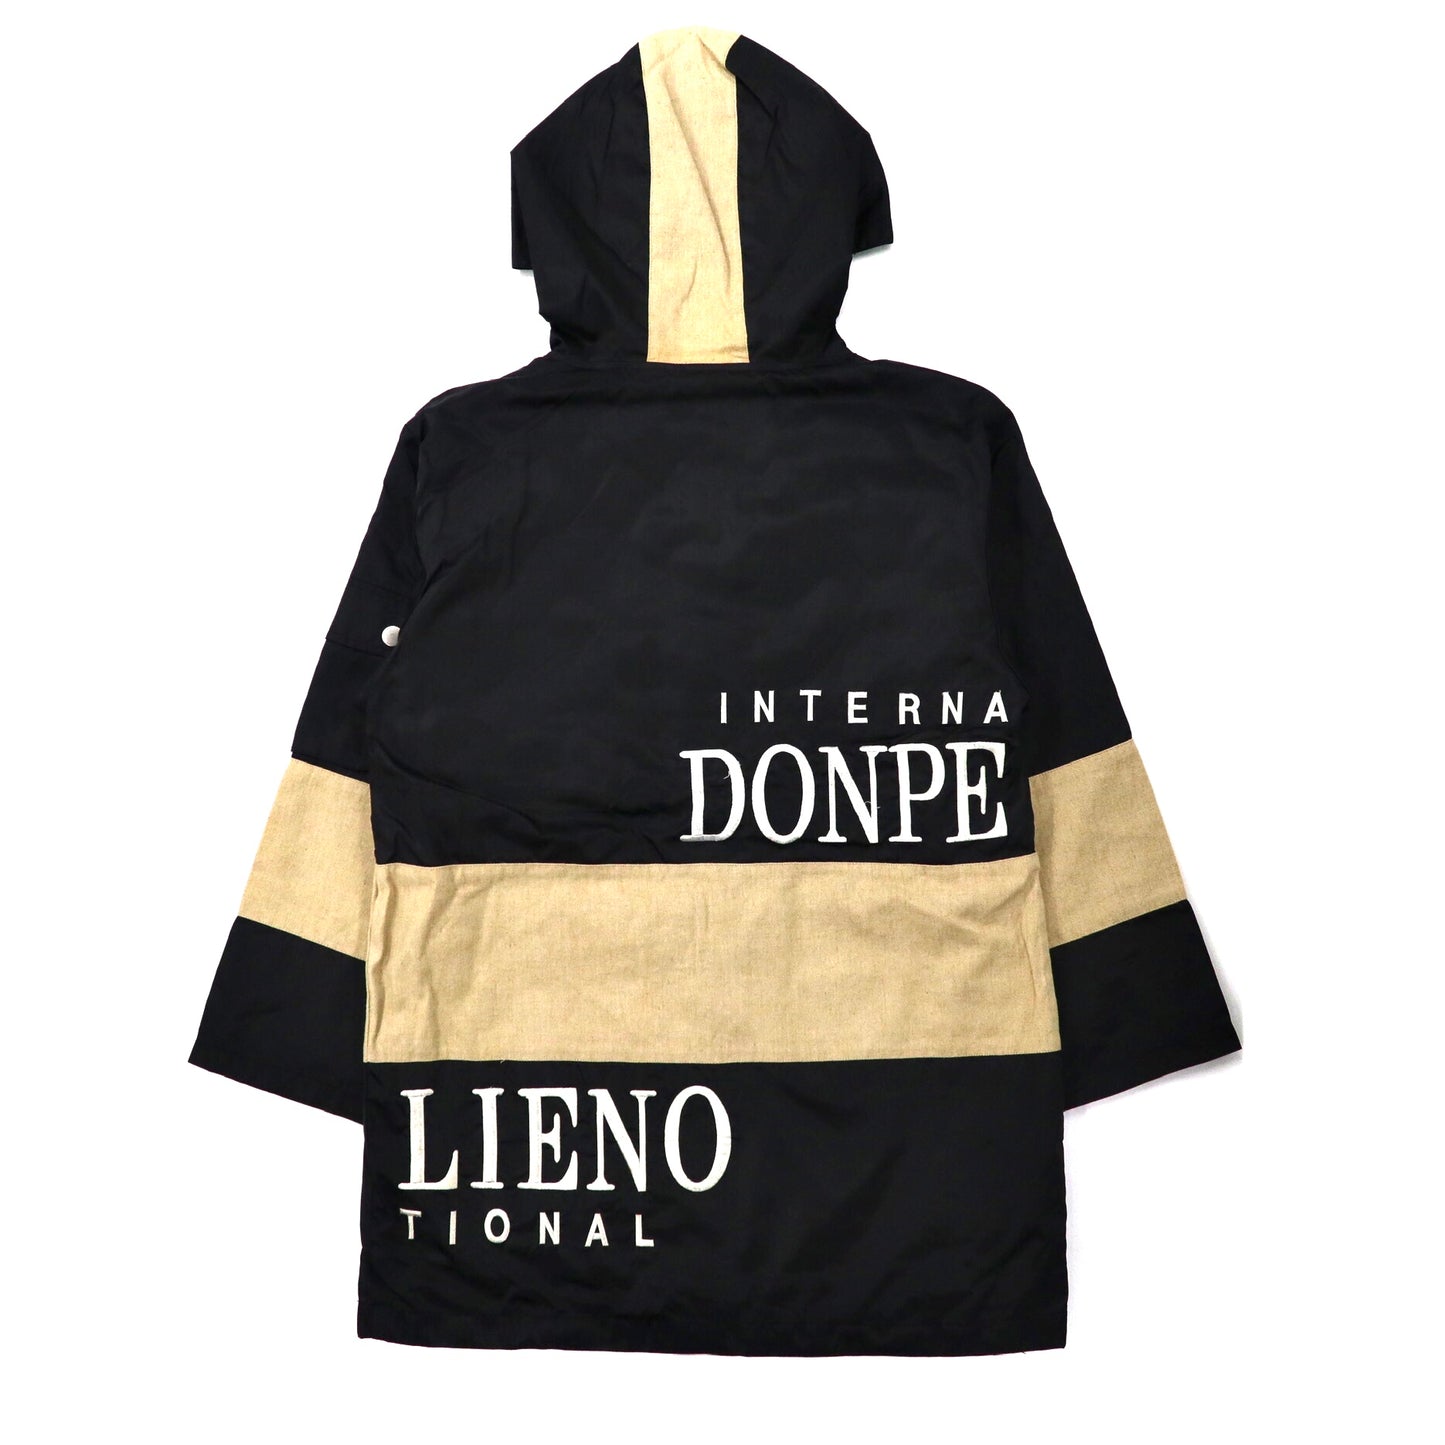 DONPELIENO INTERNATIONAL フーデッドコート XL ブラック ナイロン 異素材切り替え ロゴ刺繍